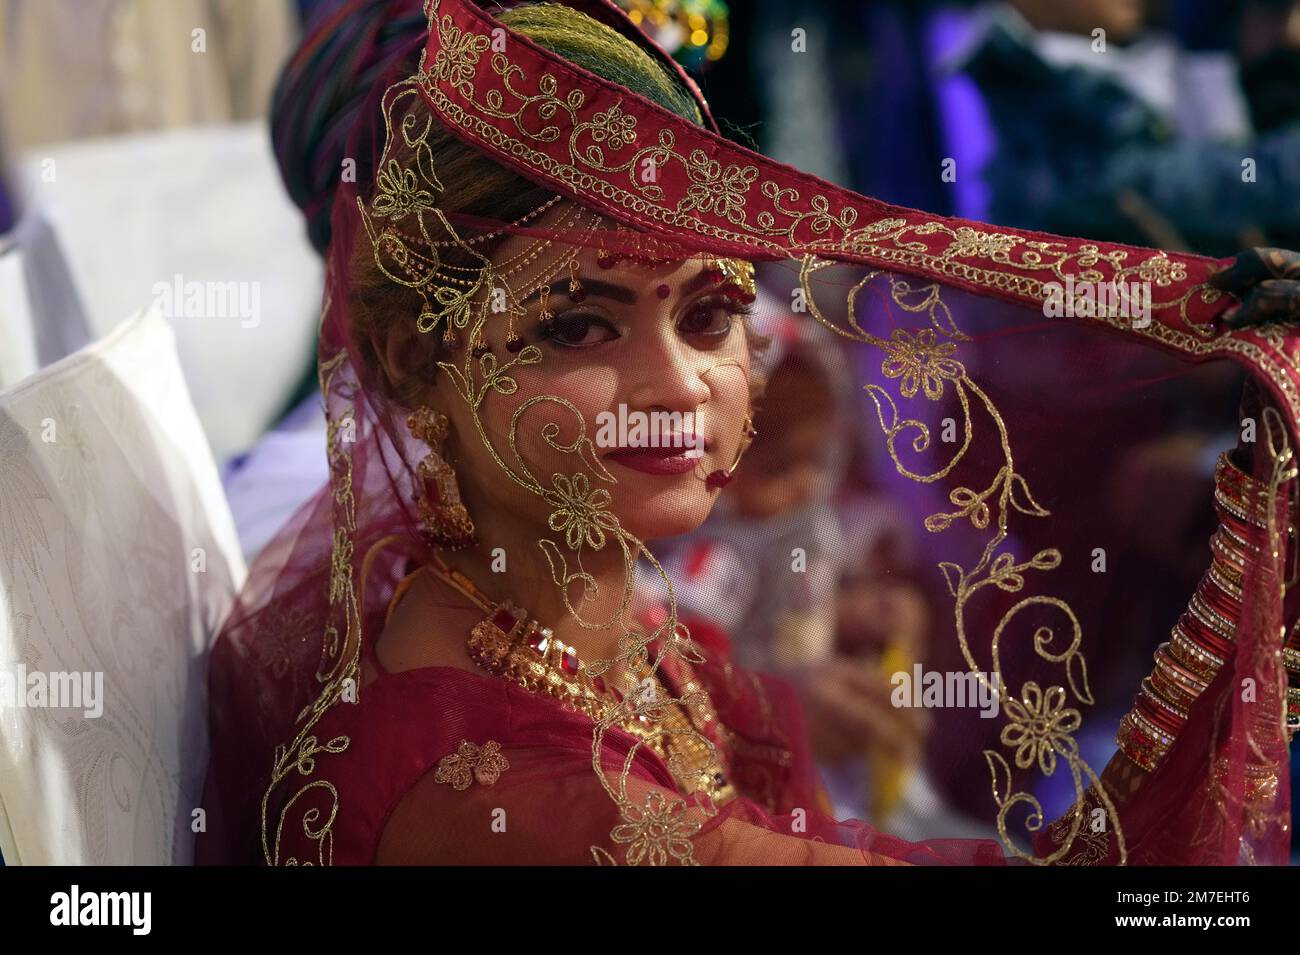 Pin by Quratulain B. on Stylishhhhh | Pakistani bridal makeup, Muslim bride,  Bridal dress design